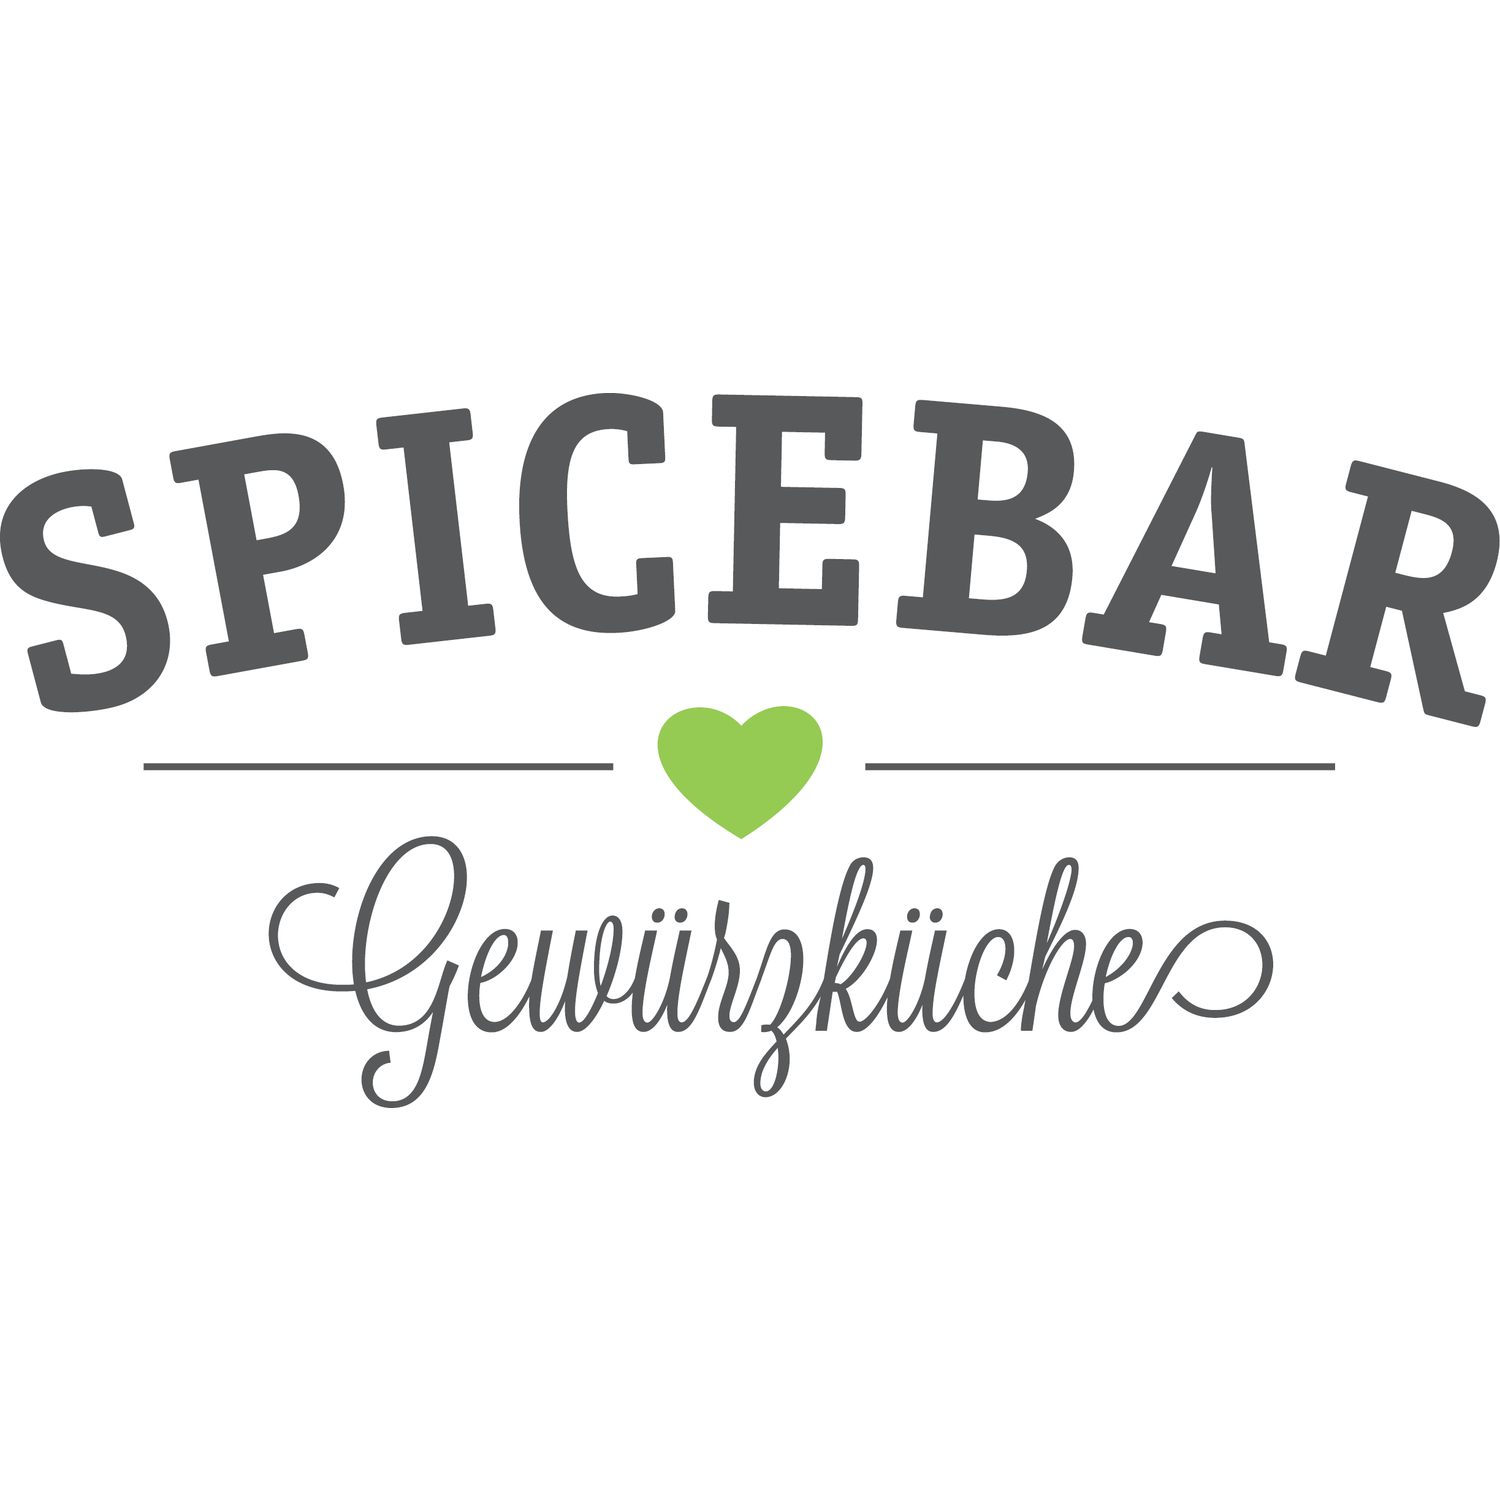 Spicebar Gewürze Reutlingen